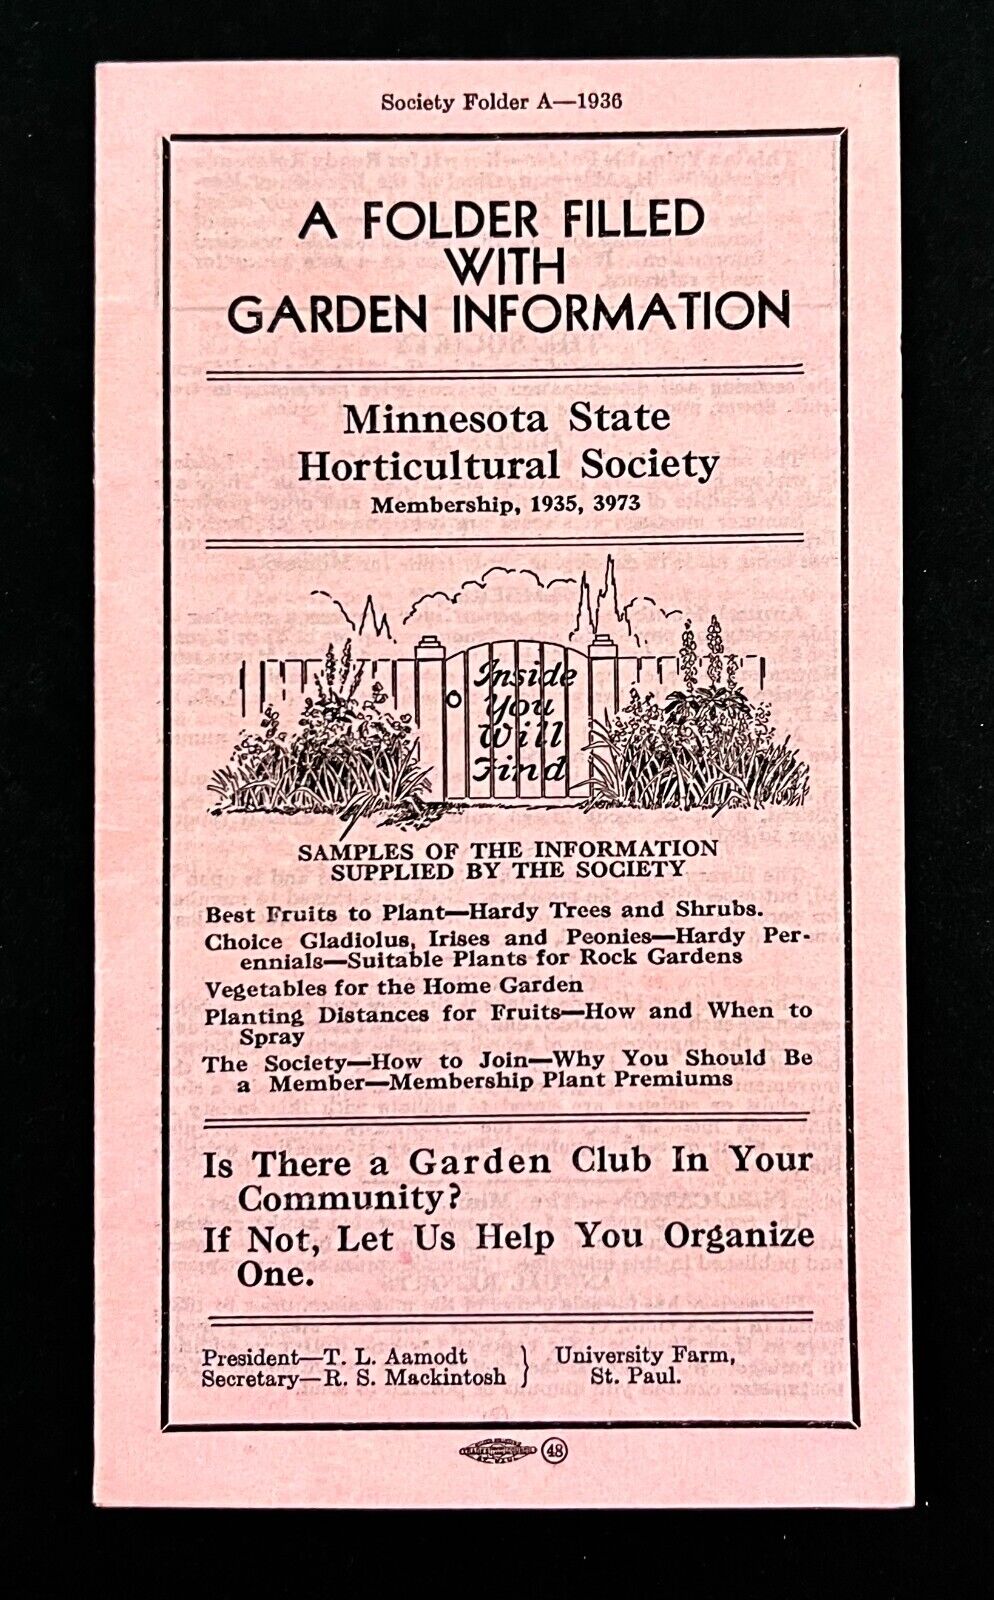 1936 Minnesota State Horticultural Society Vintage Garden Information Folder